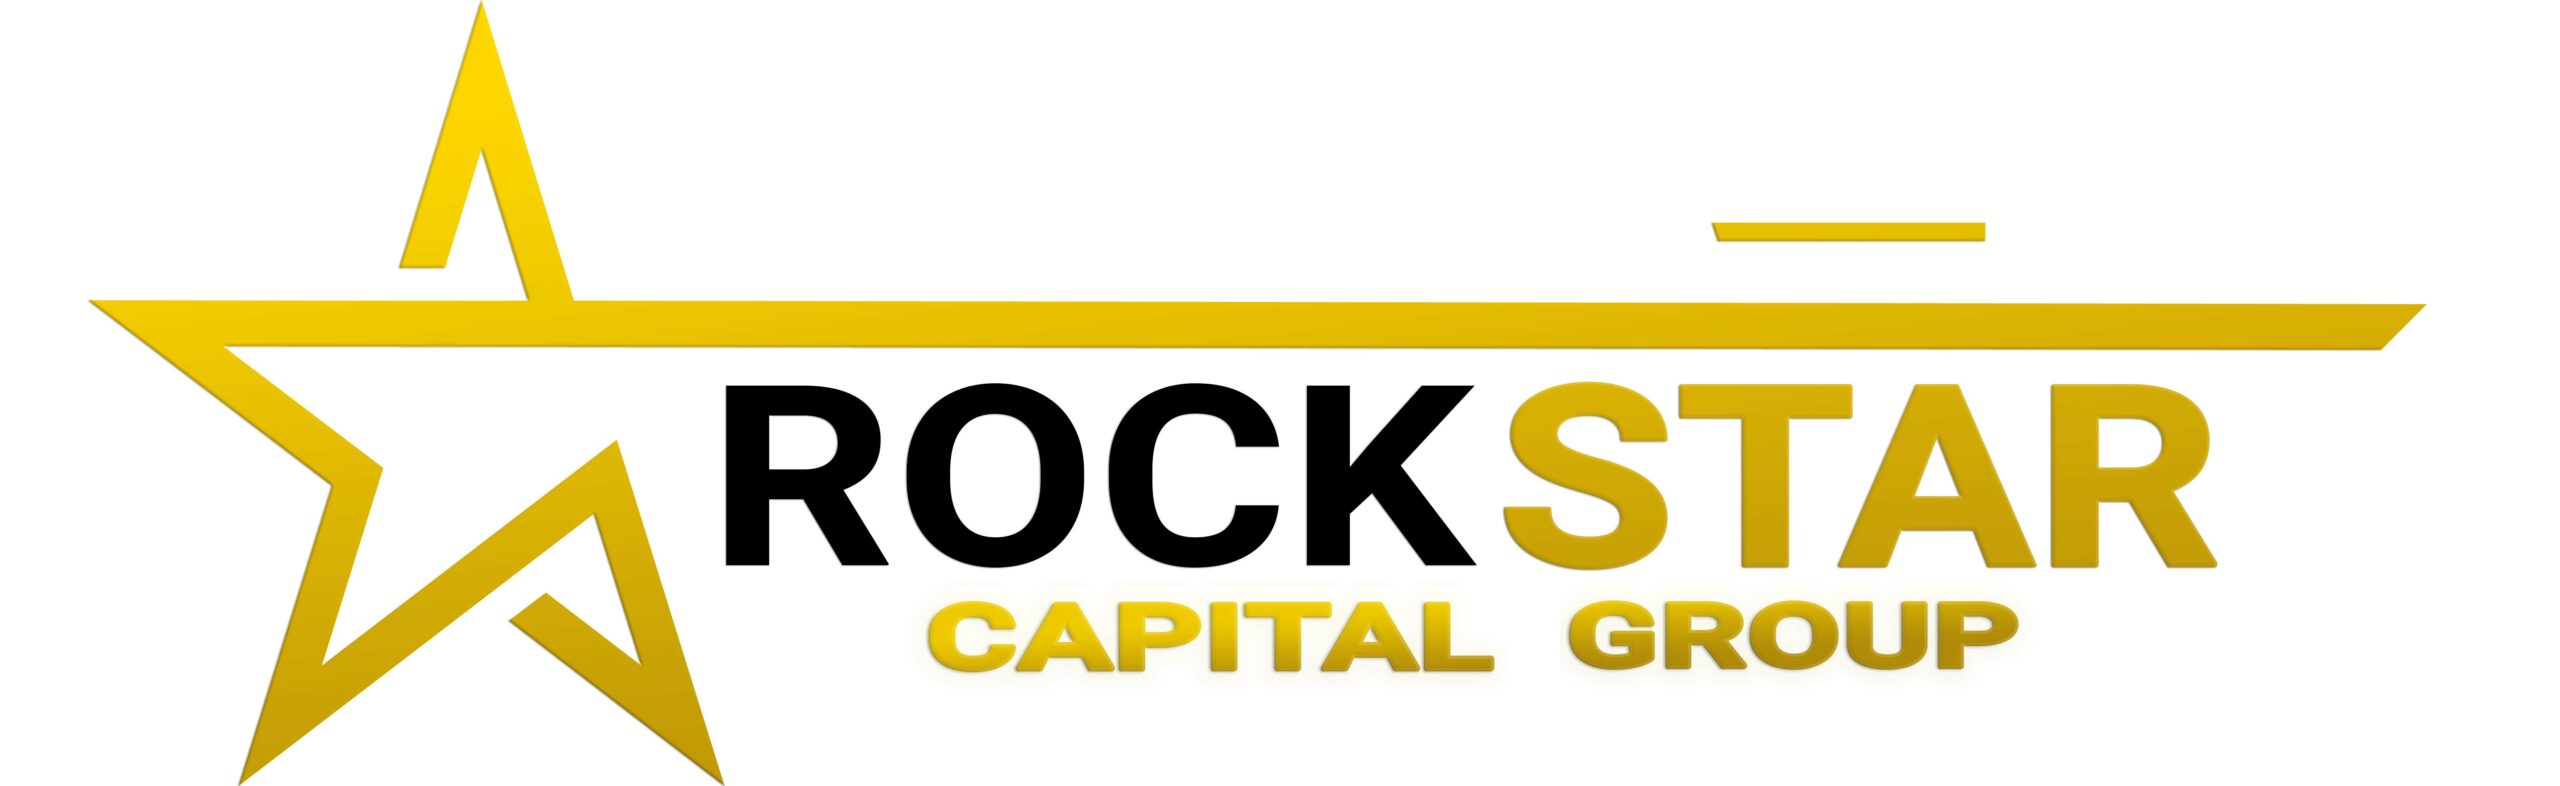 Rockstar Capital Group New Logo